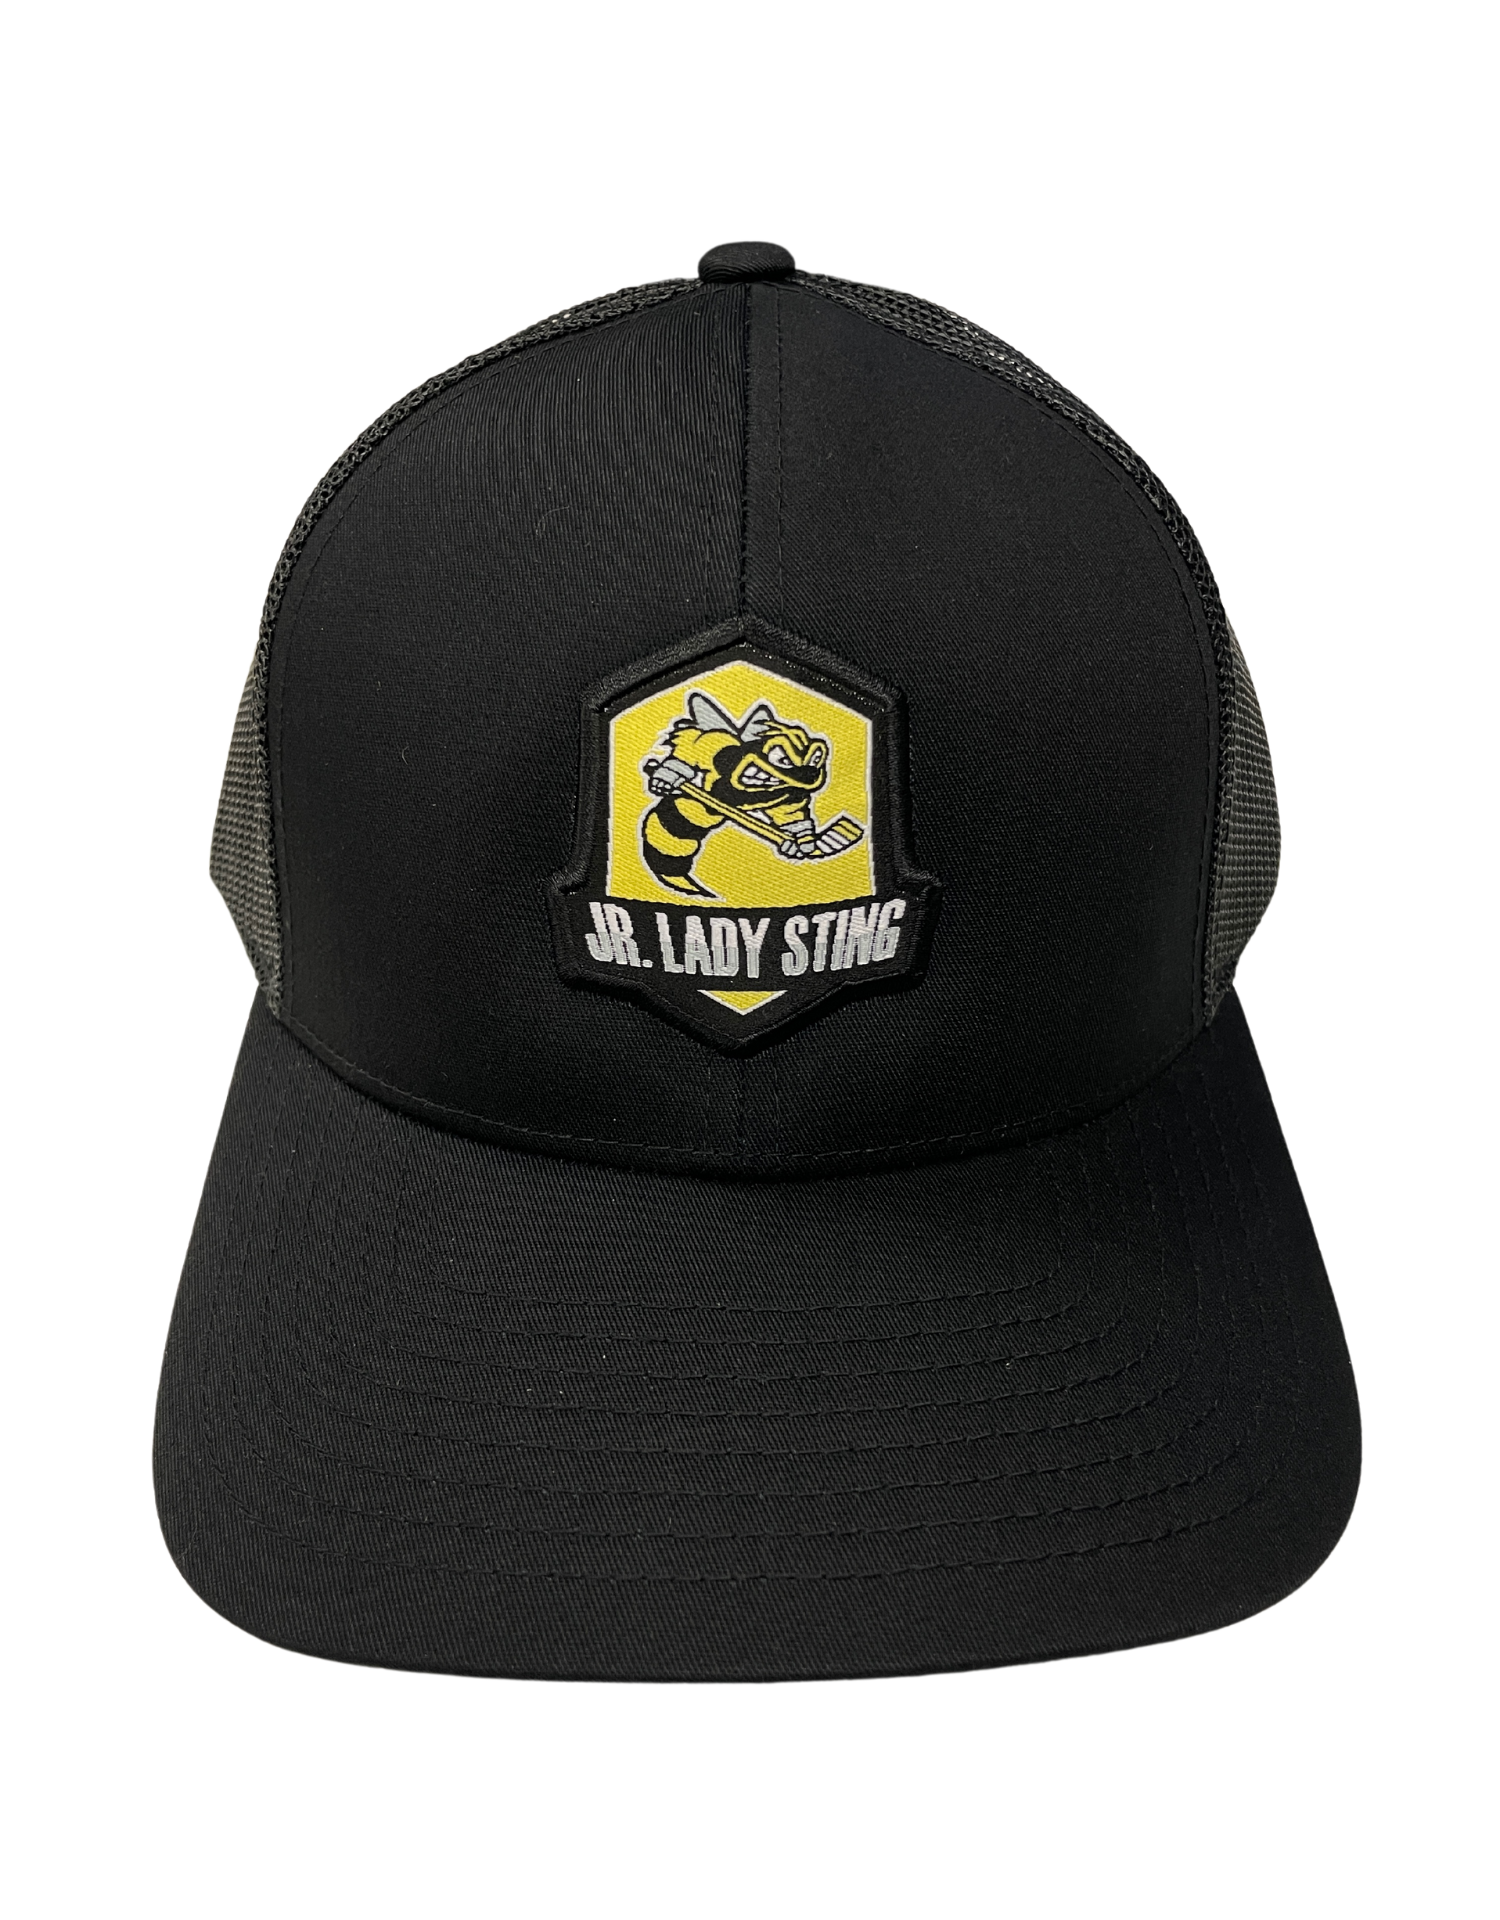 Jr. Lady Sting Baseball Hat